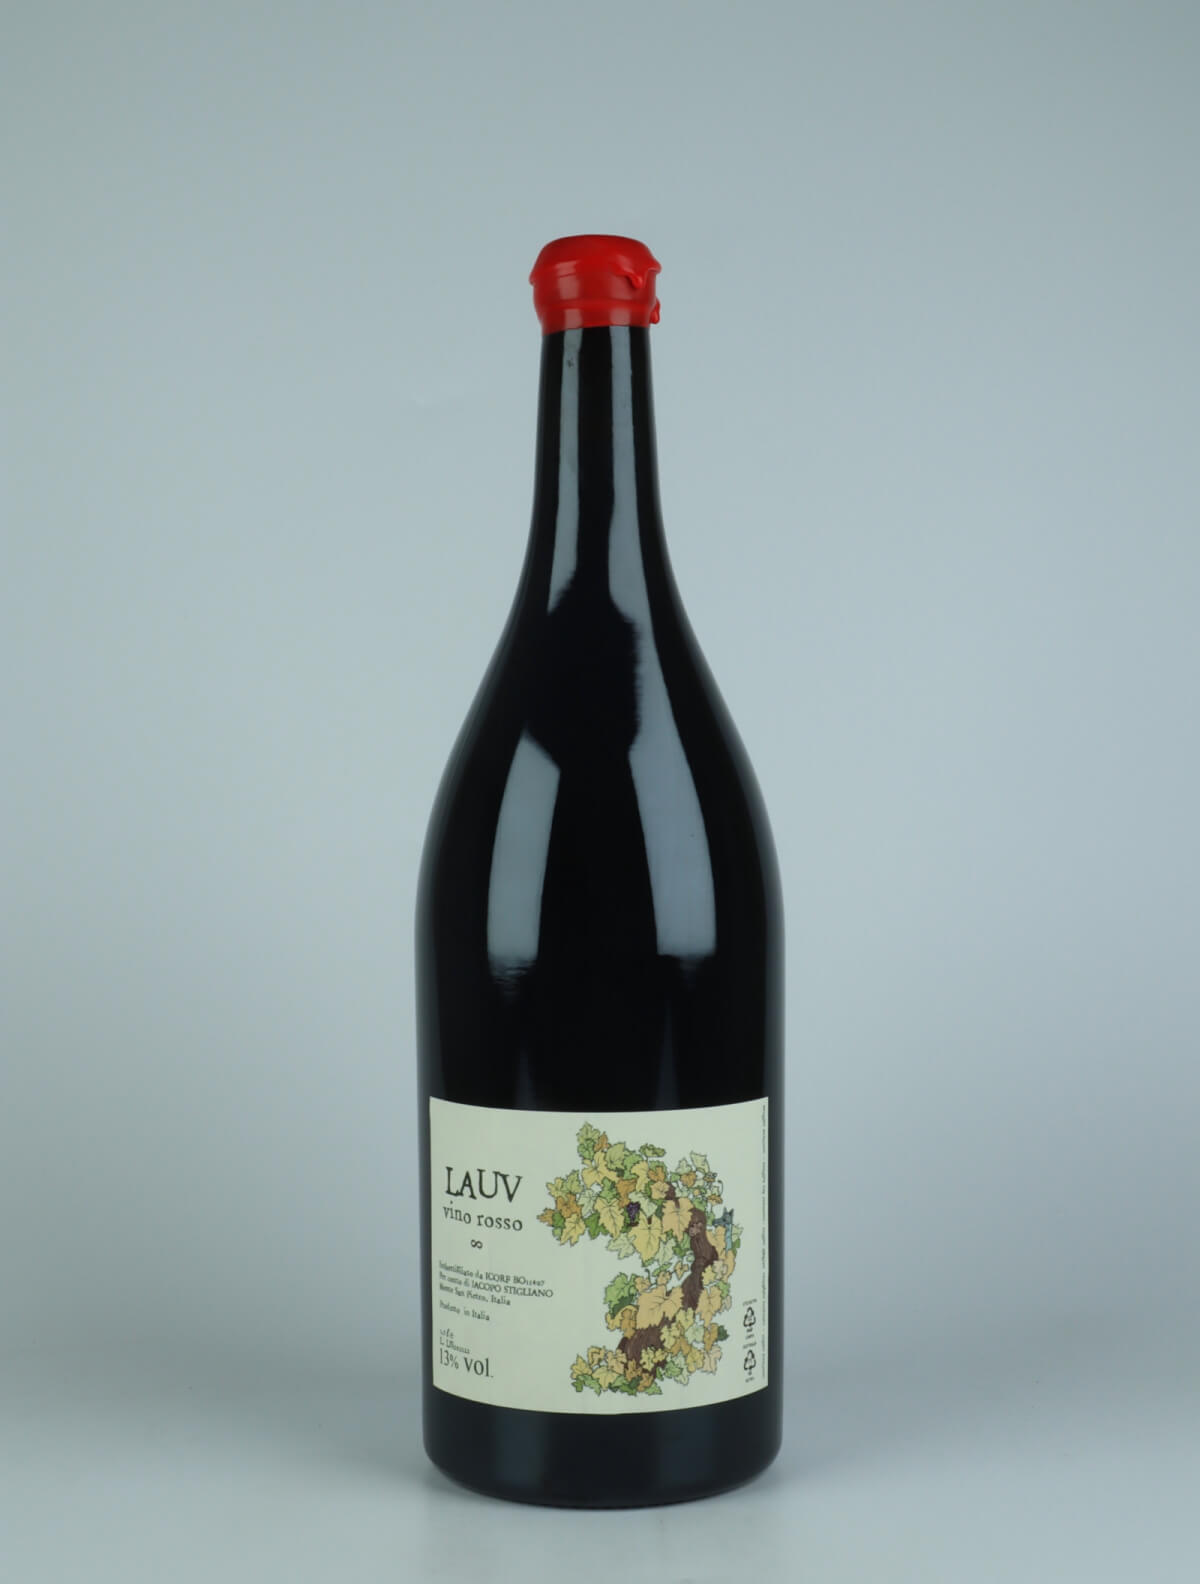 A bottle N.V. Lauv (20/21/22) Red wine from Jacopo Stigliano, Emilia-Romagna in Italy